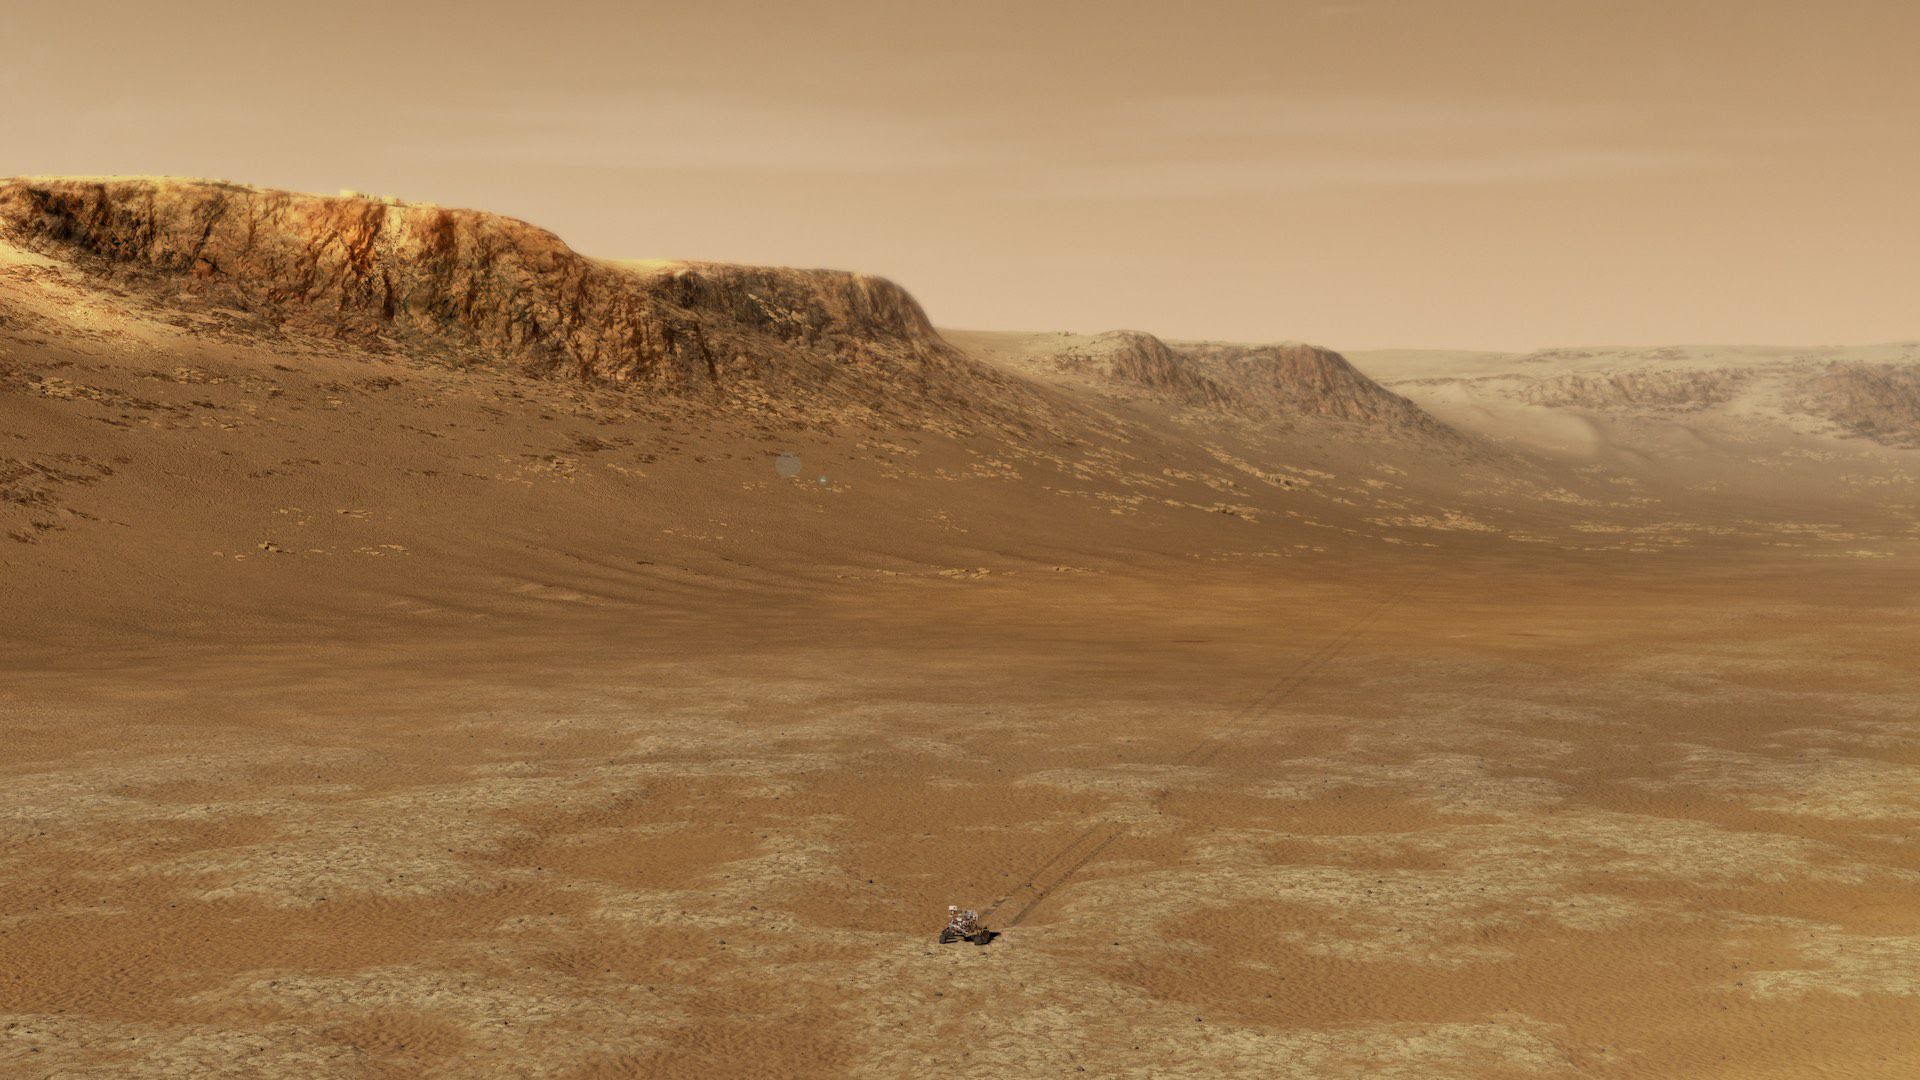 Artist's illustration of Perseverance on Mars. Image: NASA/JPL-Caltech